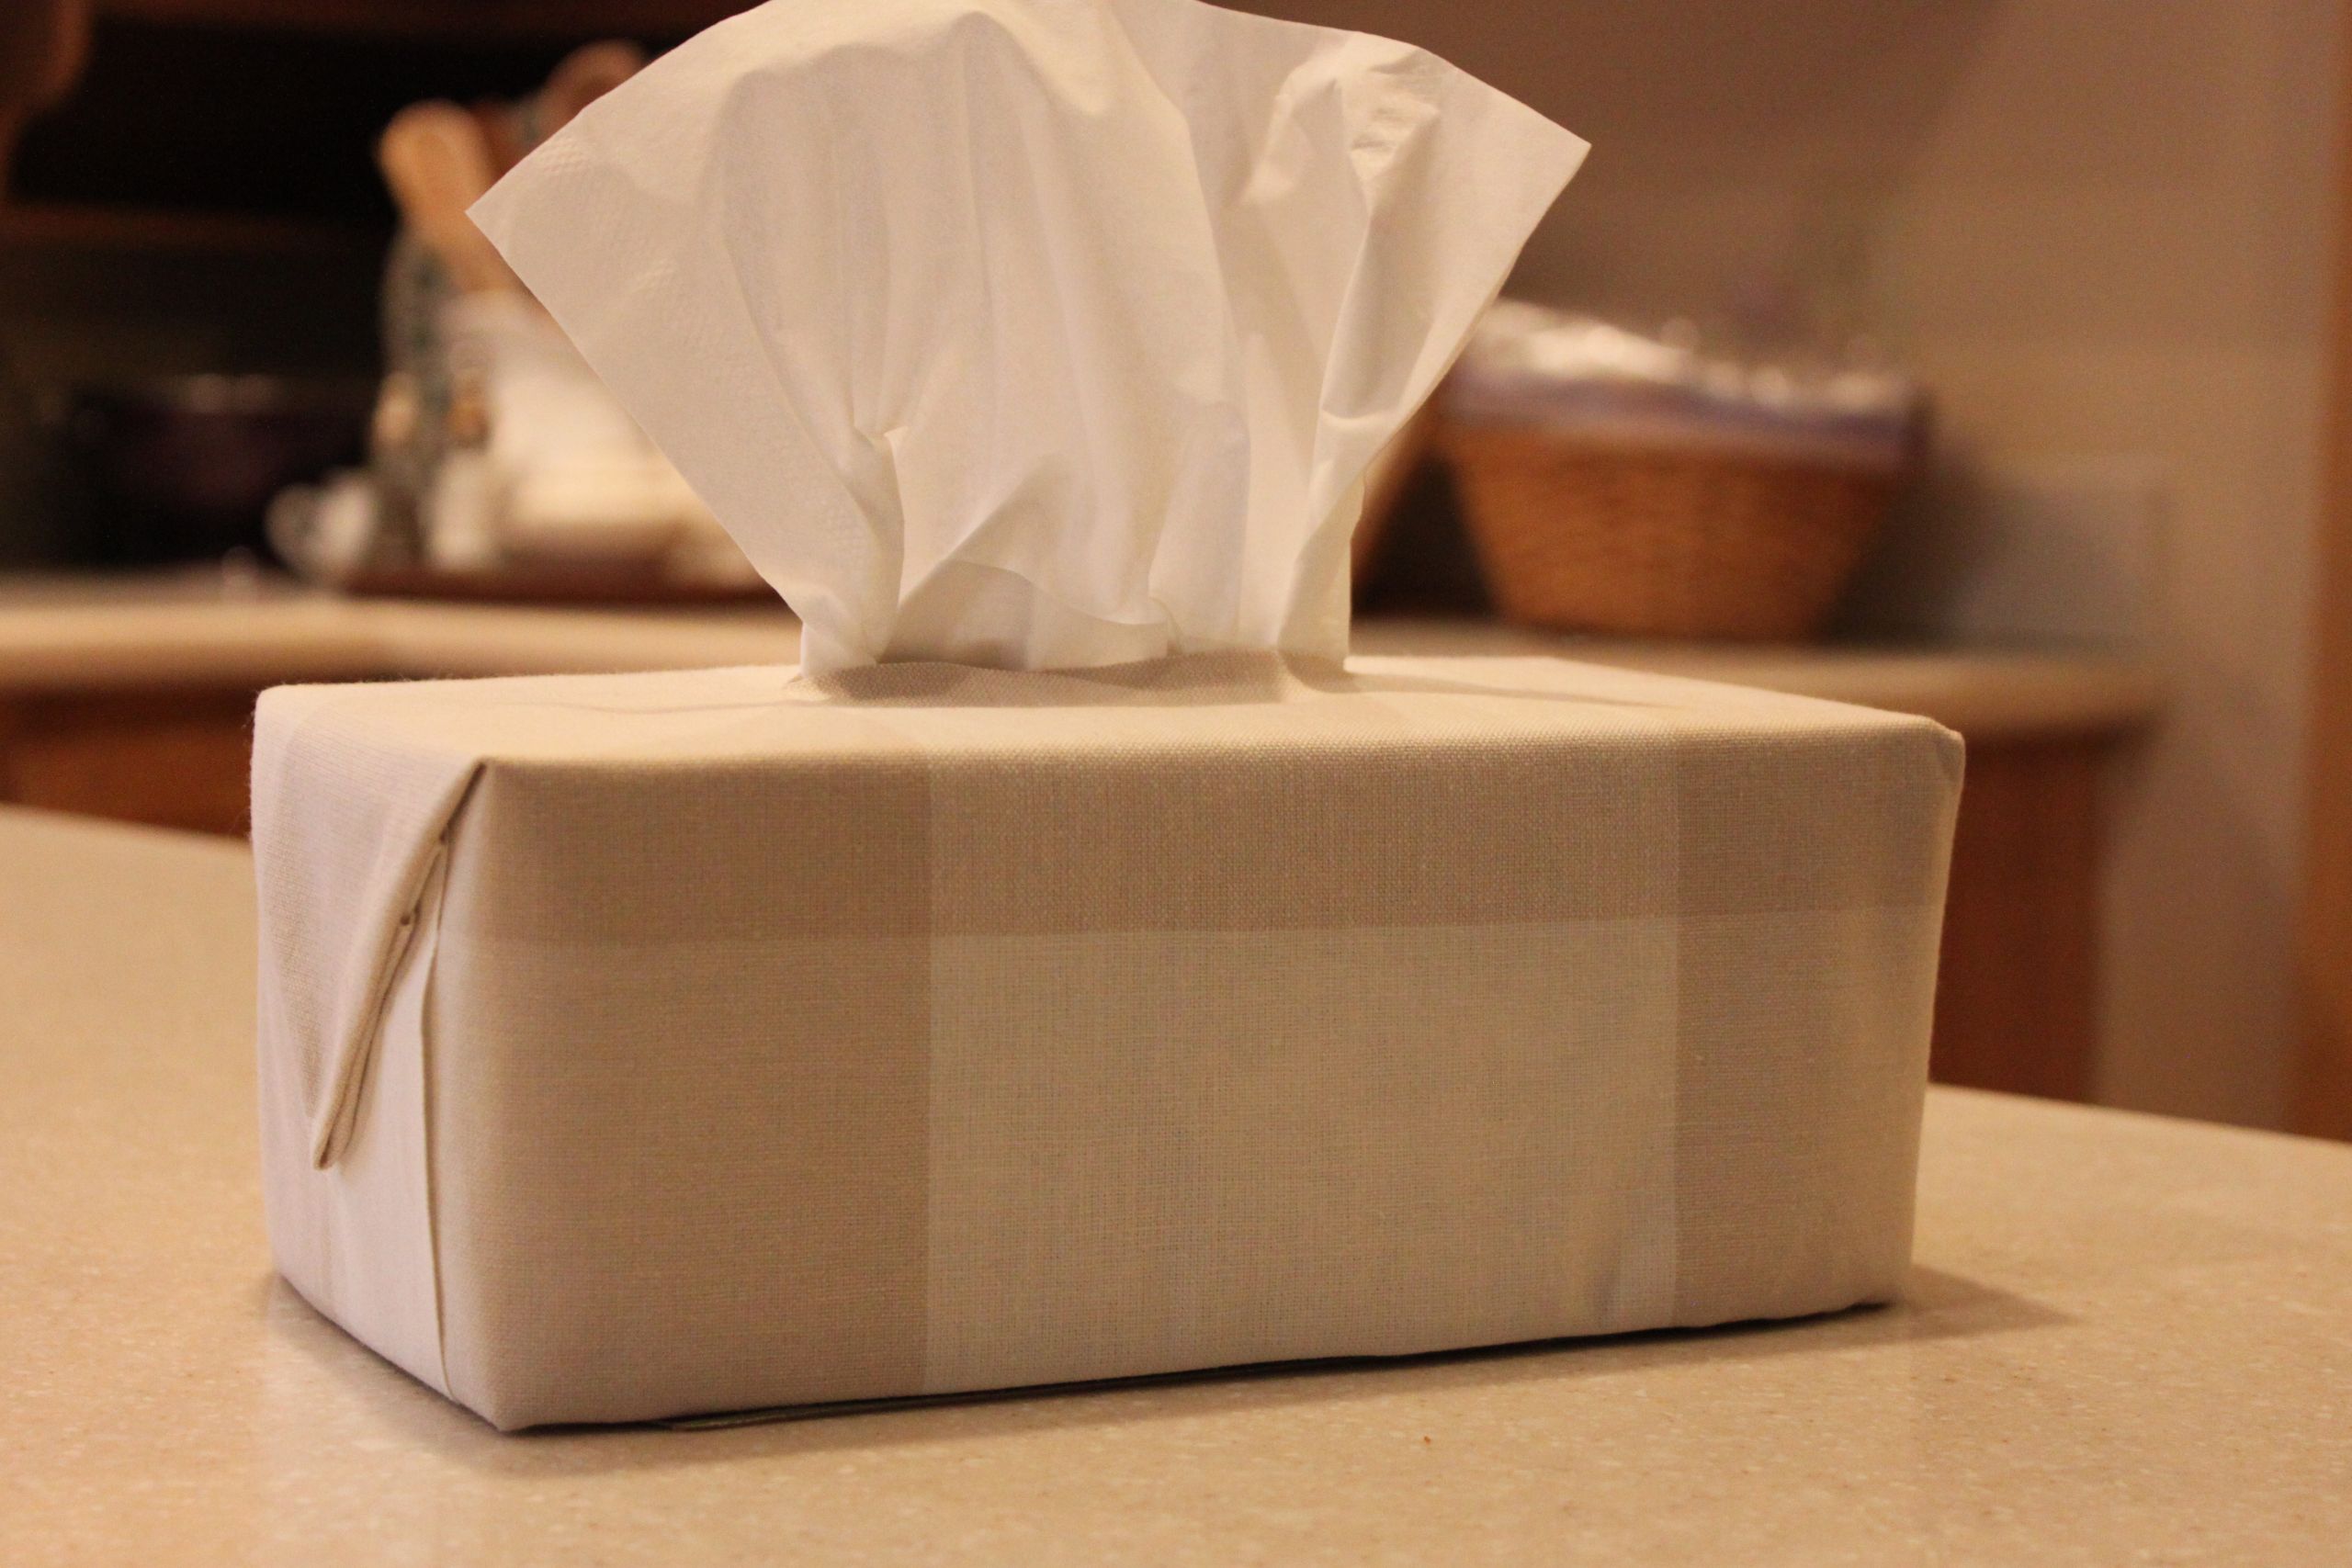 Kleenex Box Covers DIY
 DIY tissue box cover